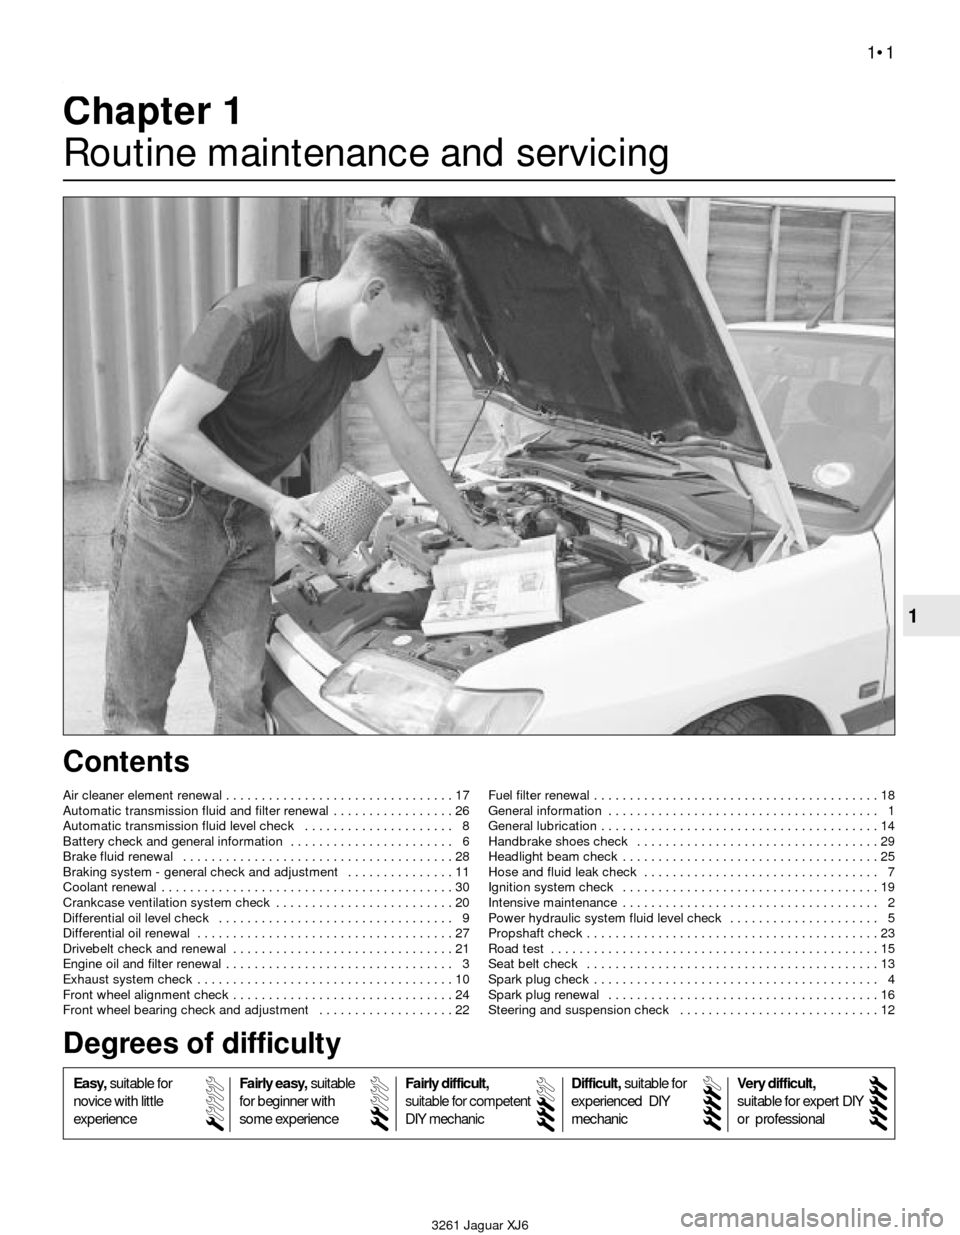 JAGUAR XJ6 1997 2.G Workshop Manual 3261 Jaguar XJ6
1
Chapter 1
Routine maintenance and servicing
Air cleaner element renewal . . . . . . . . . . . . . . . . . . . . . . . . . . . . . . . . 17
Automatic transmission fluid and filter ren